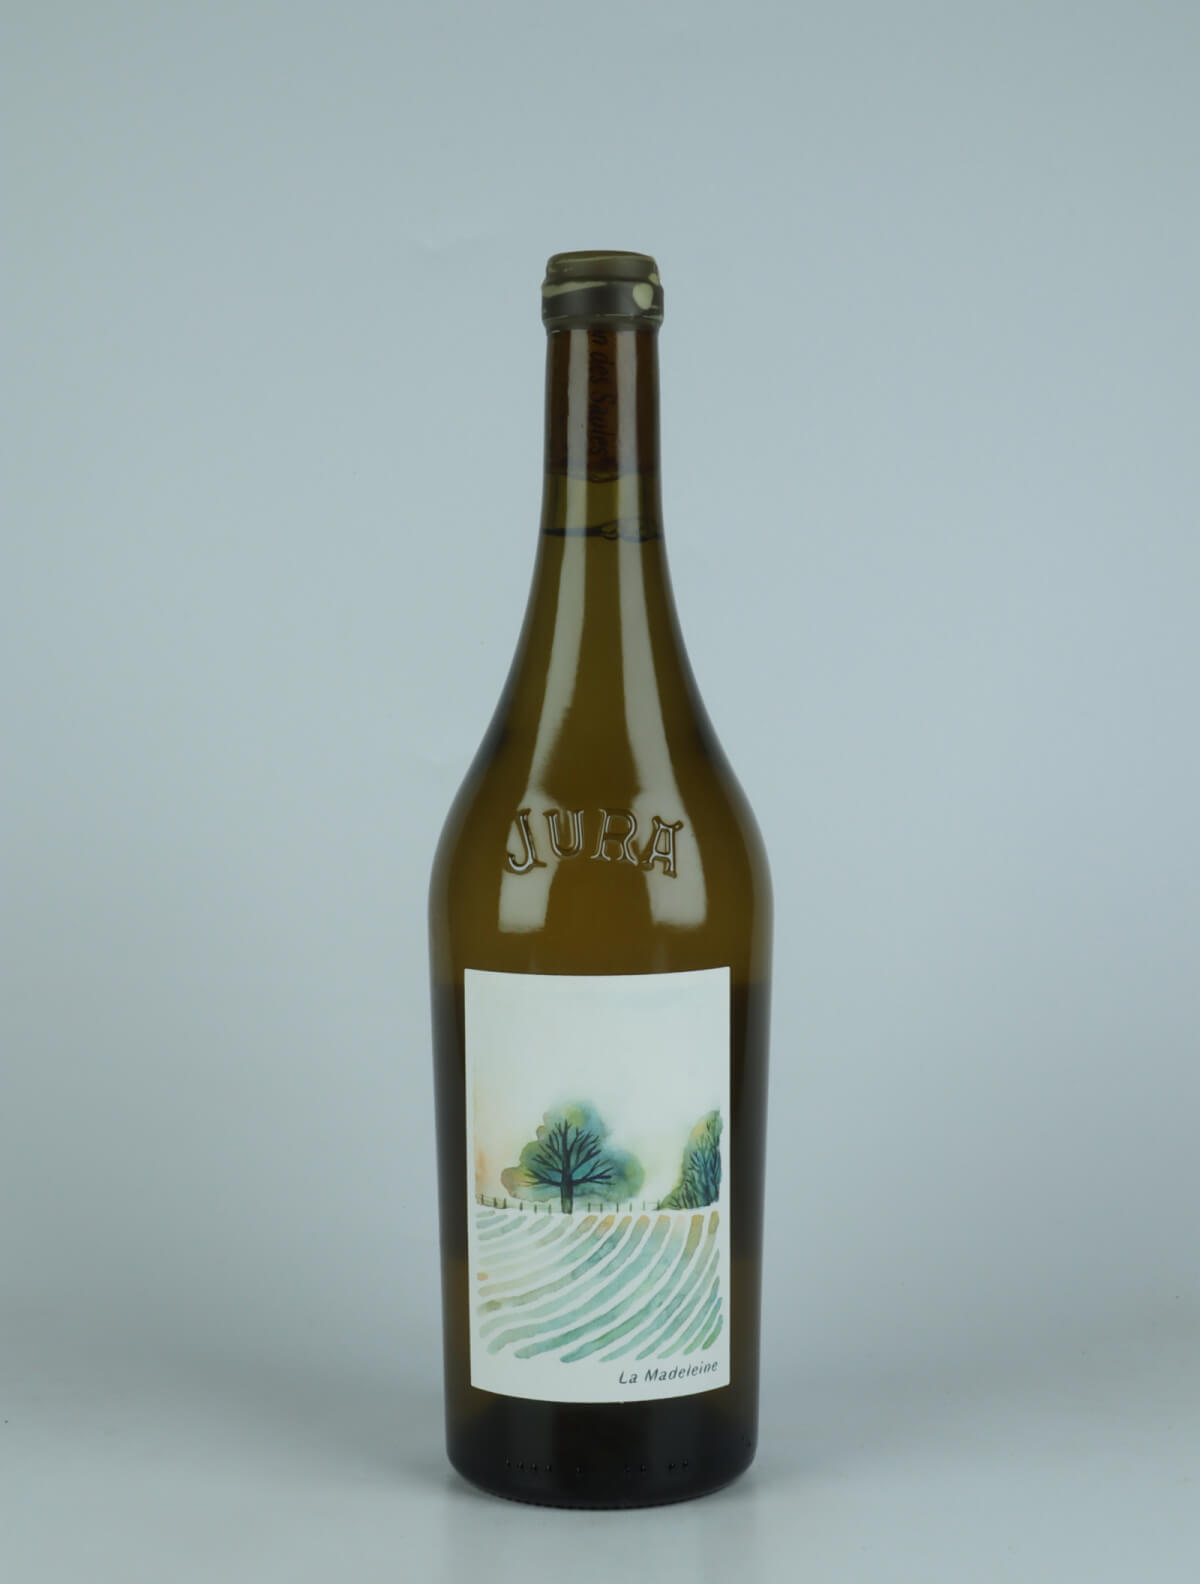 A bottle 2022 Côtes du Jura - Chardonnay - La Madeleine White wine from Maison des Saules, Jura in France